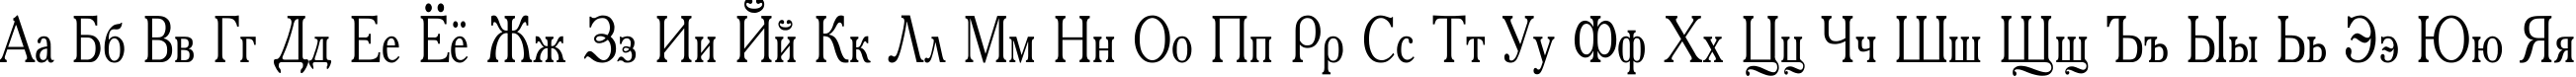 Пример написания русского алфавита шрифтом Academy Condensed